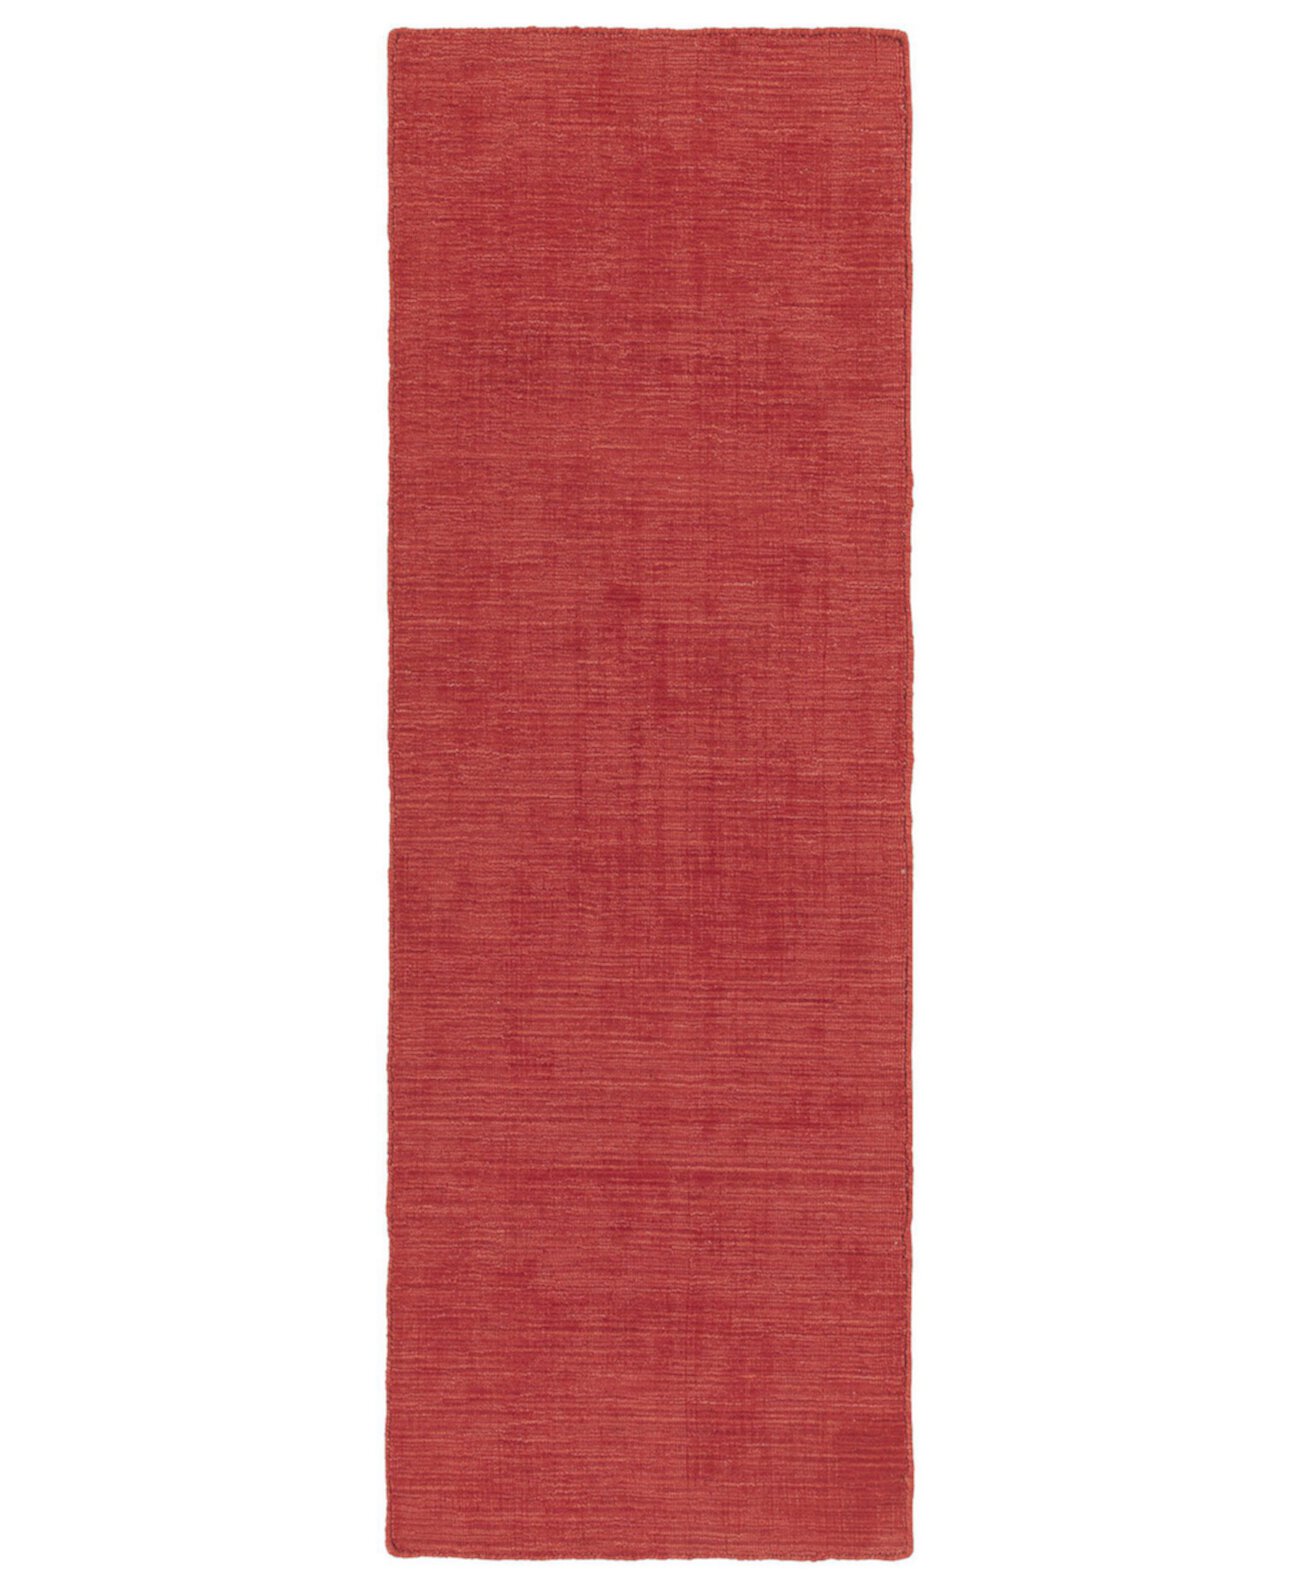 Lauderdale LDD01-92 Розовый коврик для дорожки размером 2 x 6 футов Kaleen